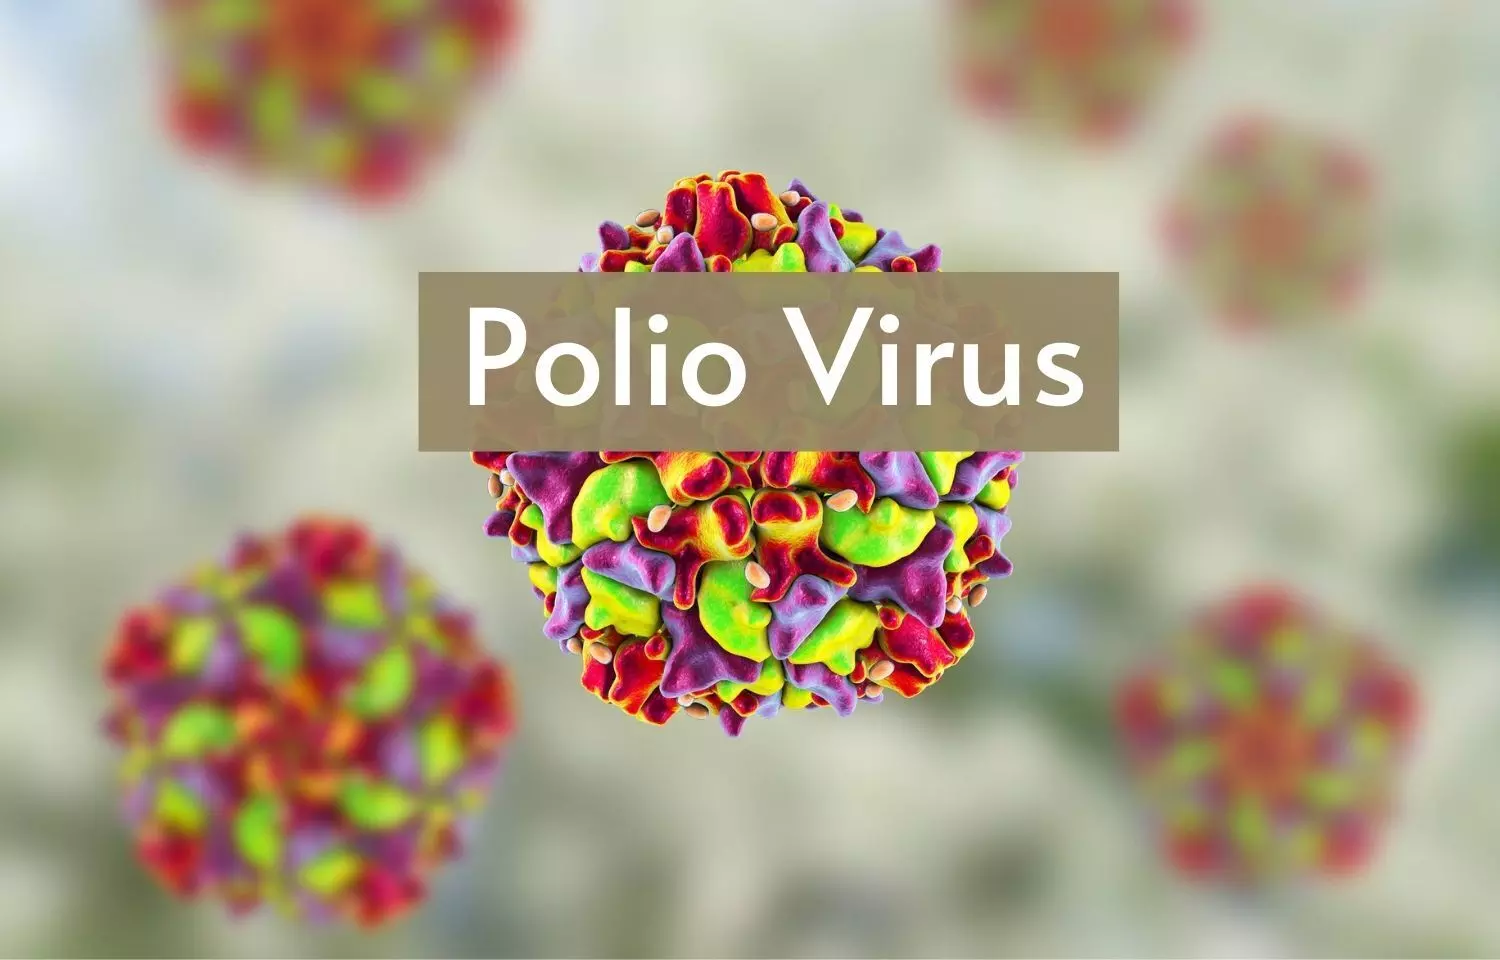 Poliovirus found in New York City wastewater